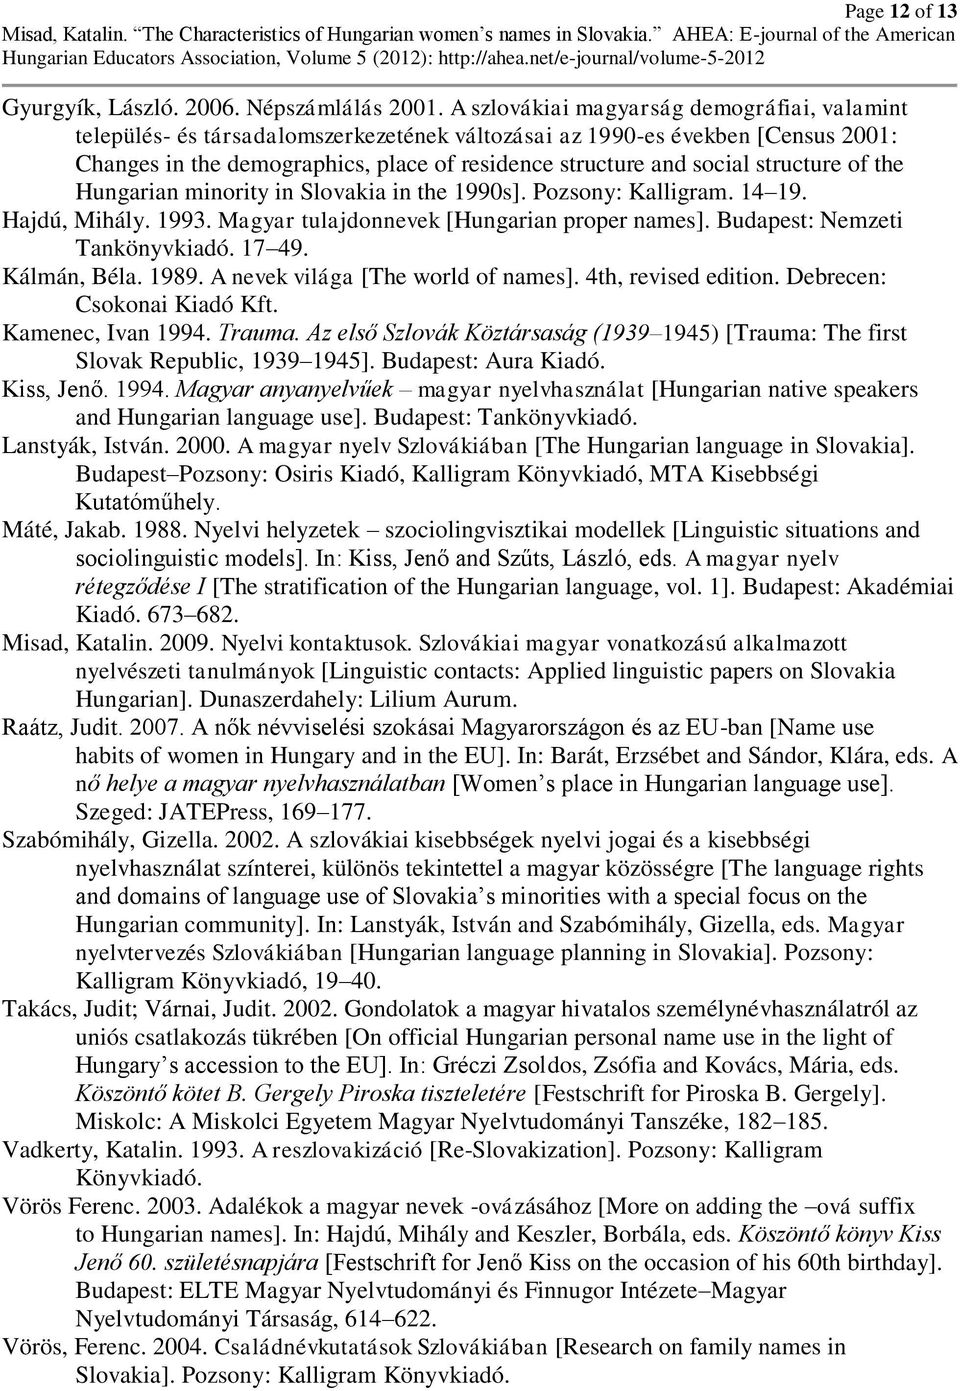 structure of the Hungarian minority in Slovakia in the 1990s]. Pozsony: Kalligram. 14 19. Hajdú, Mihály. 1993. Magyar tulajdonnevek [Hungarian proper names]. Budapest: Nemzeti Tankönyvkiadó. 17 49.